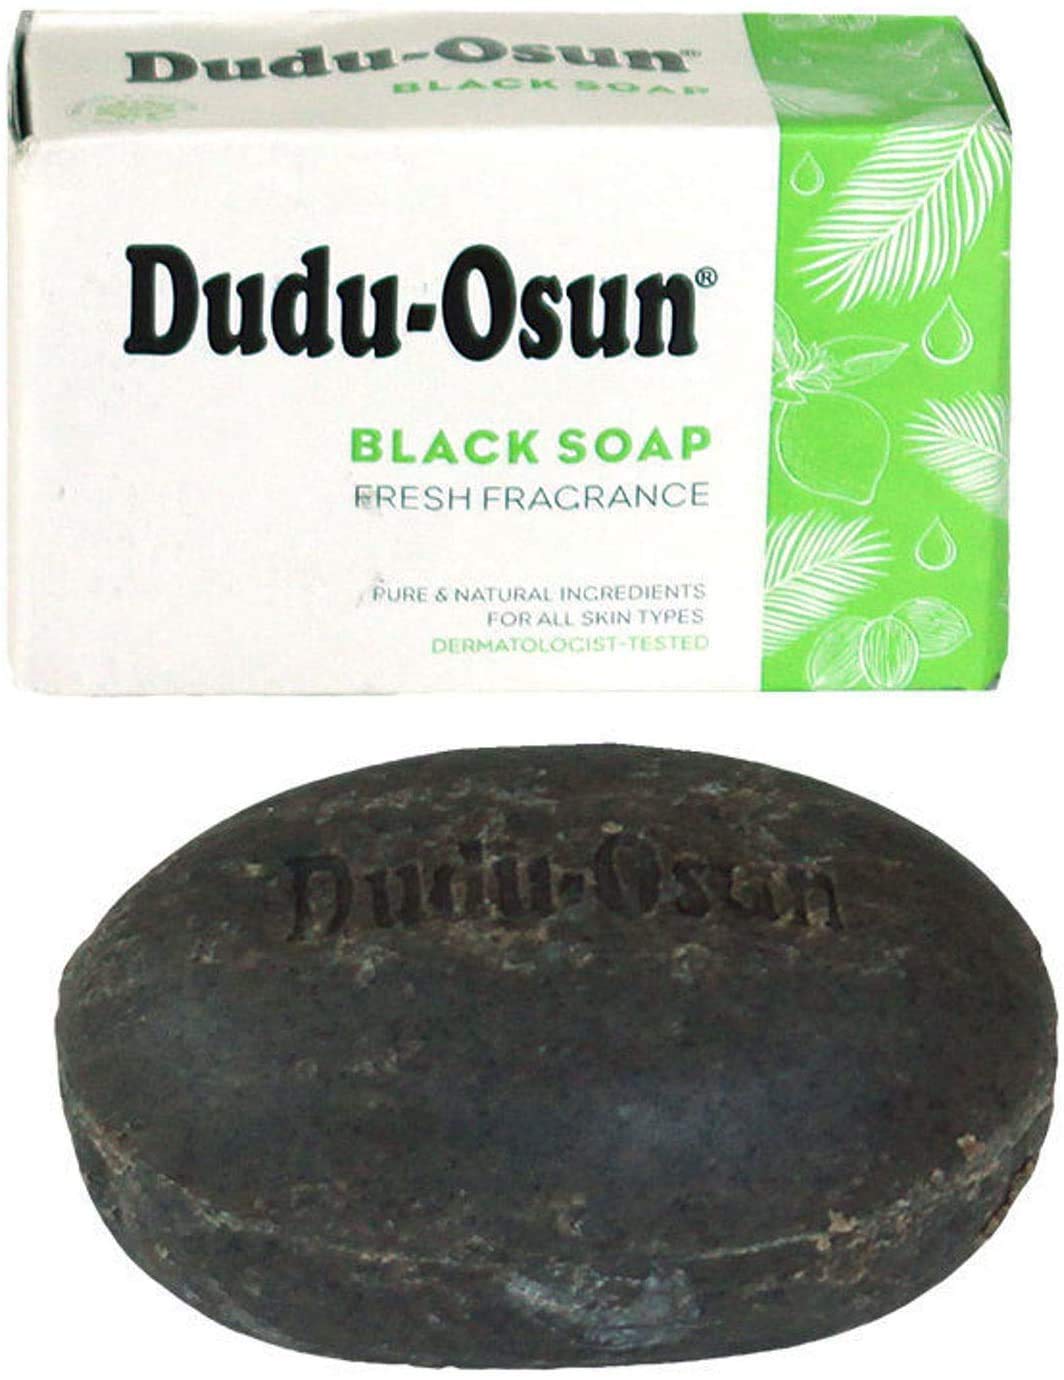 Dudu Osun black soap